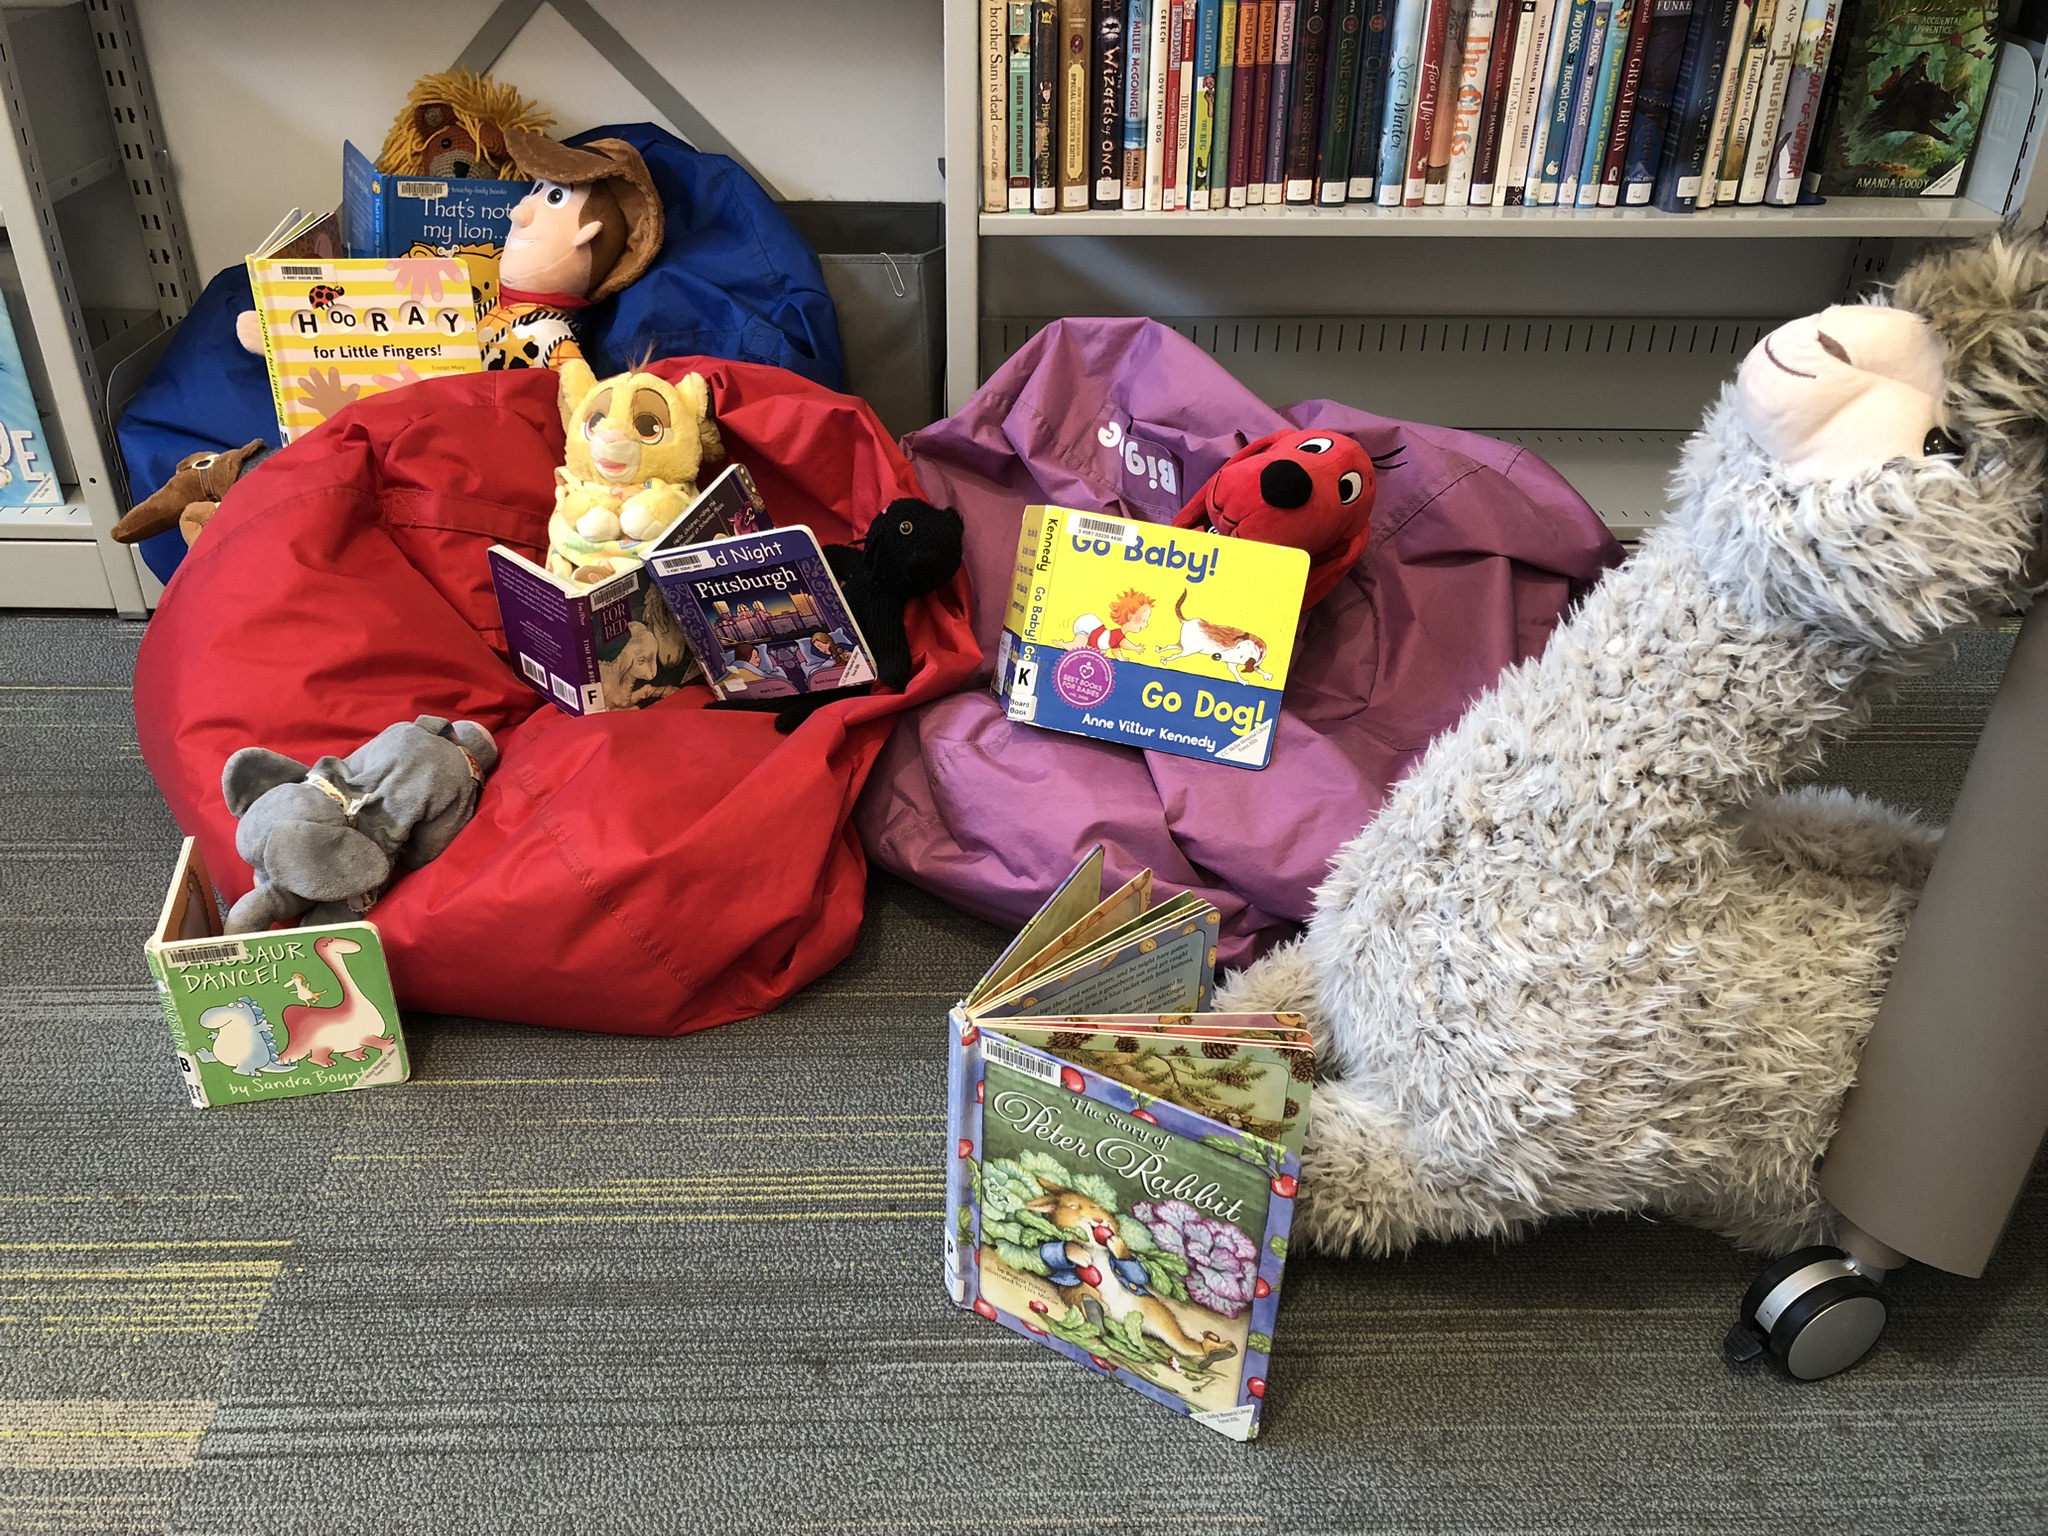 Stuffed animals posed reading books